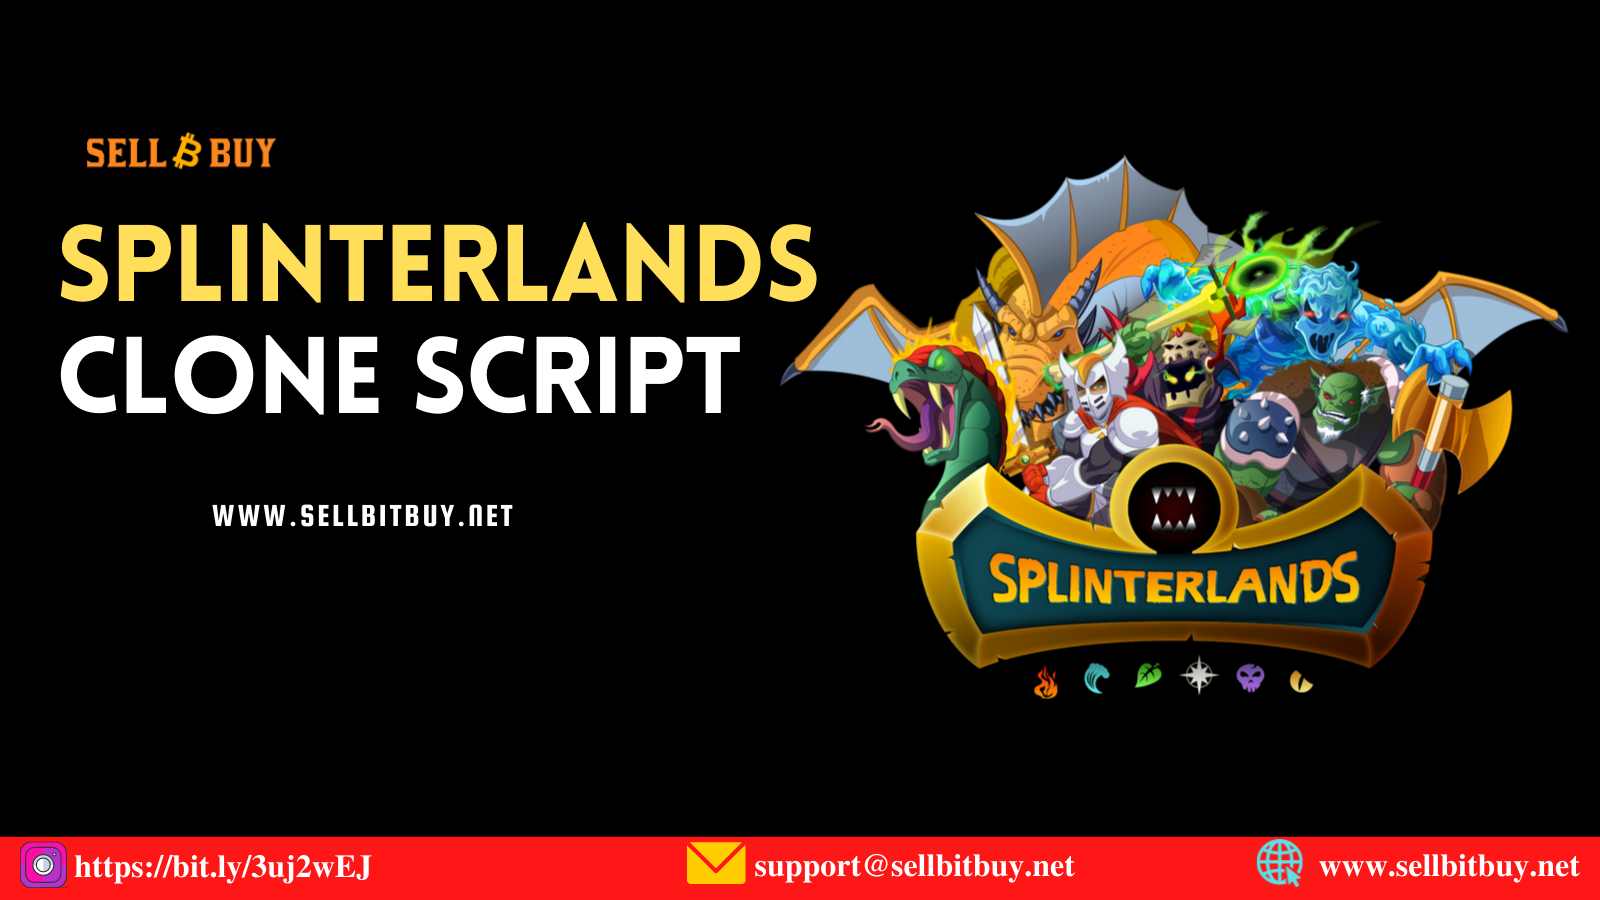 Splinterlands Clone Script - To Build A NFT Card Gaming Platform Like Splinterlands